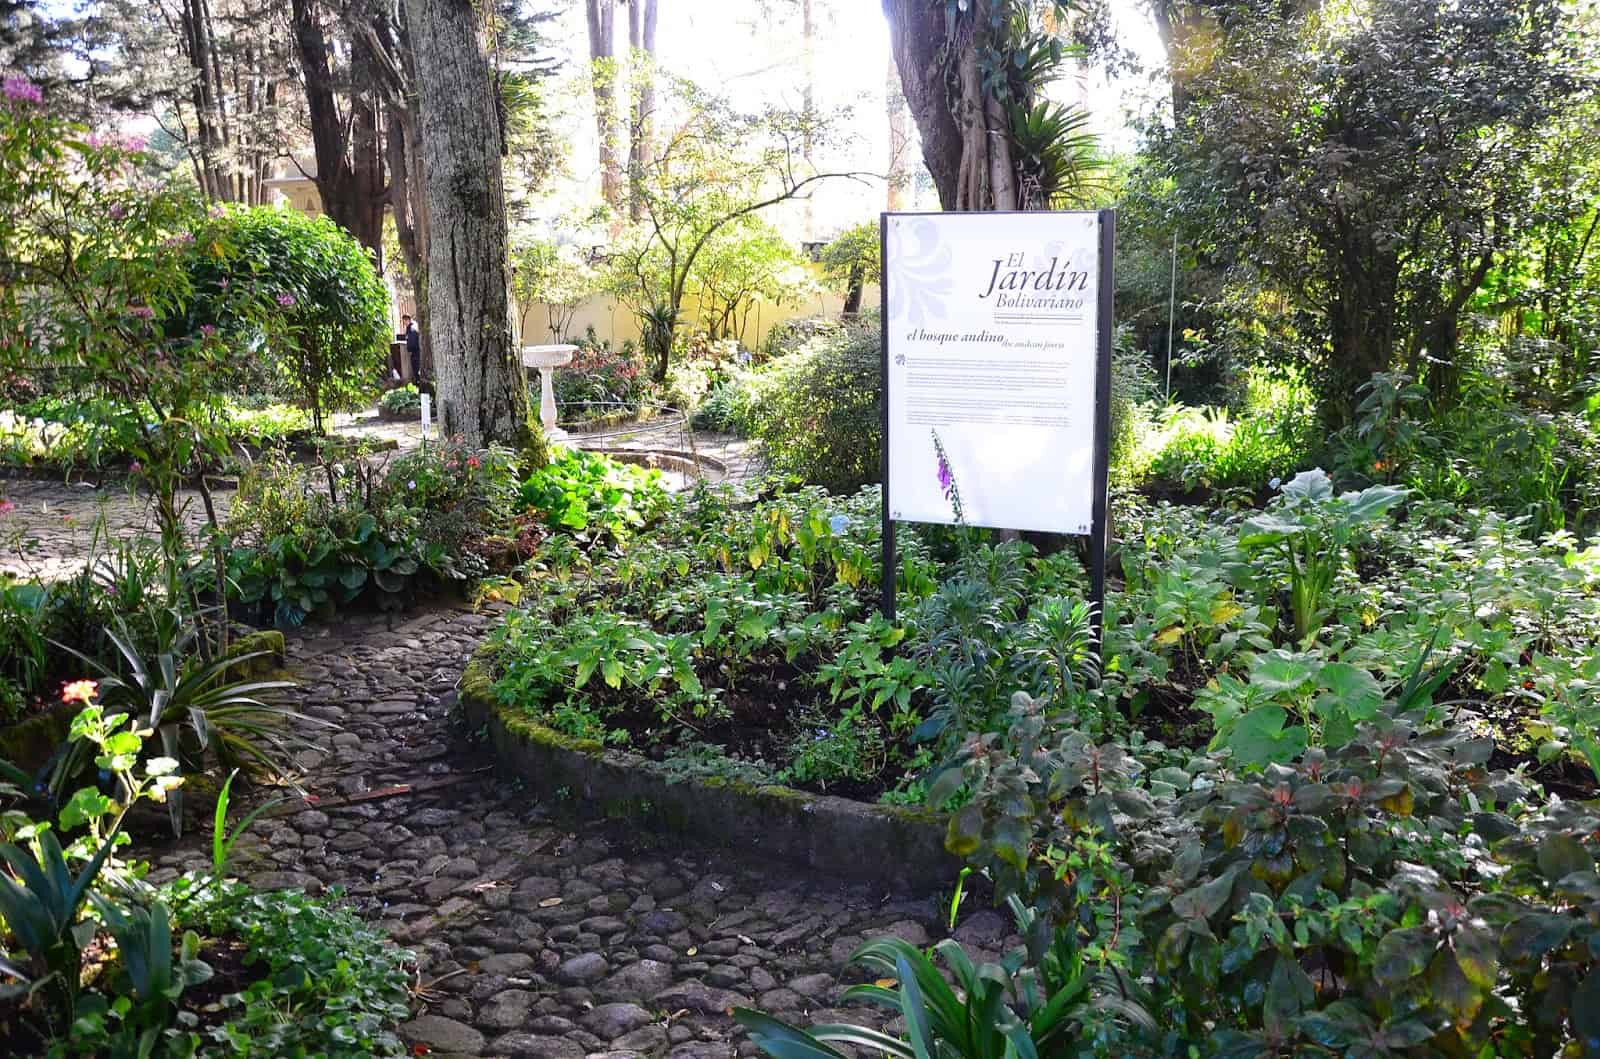 Bolivarian Garden at Quinta de Bolívar in La Candelaria, Bogotá, Colombia